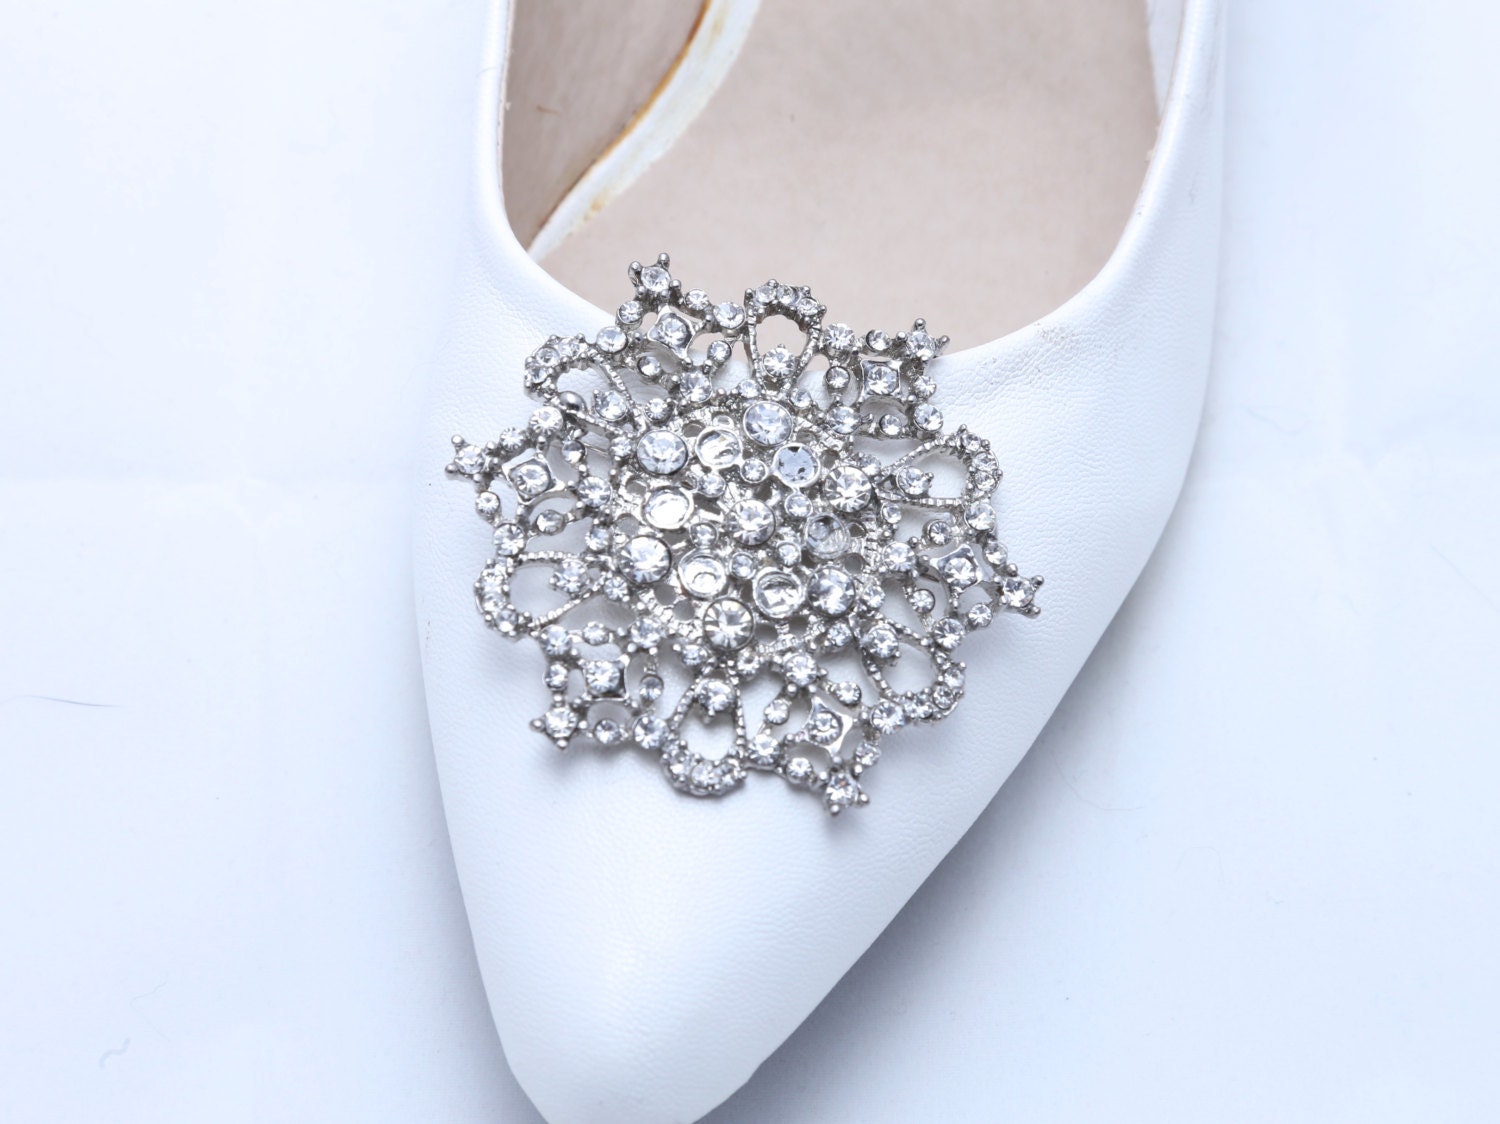 Bridal Shoe Clips Wedding Shoe Clips Jewelry by sweetygarden